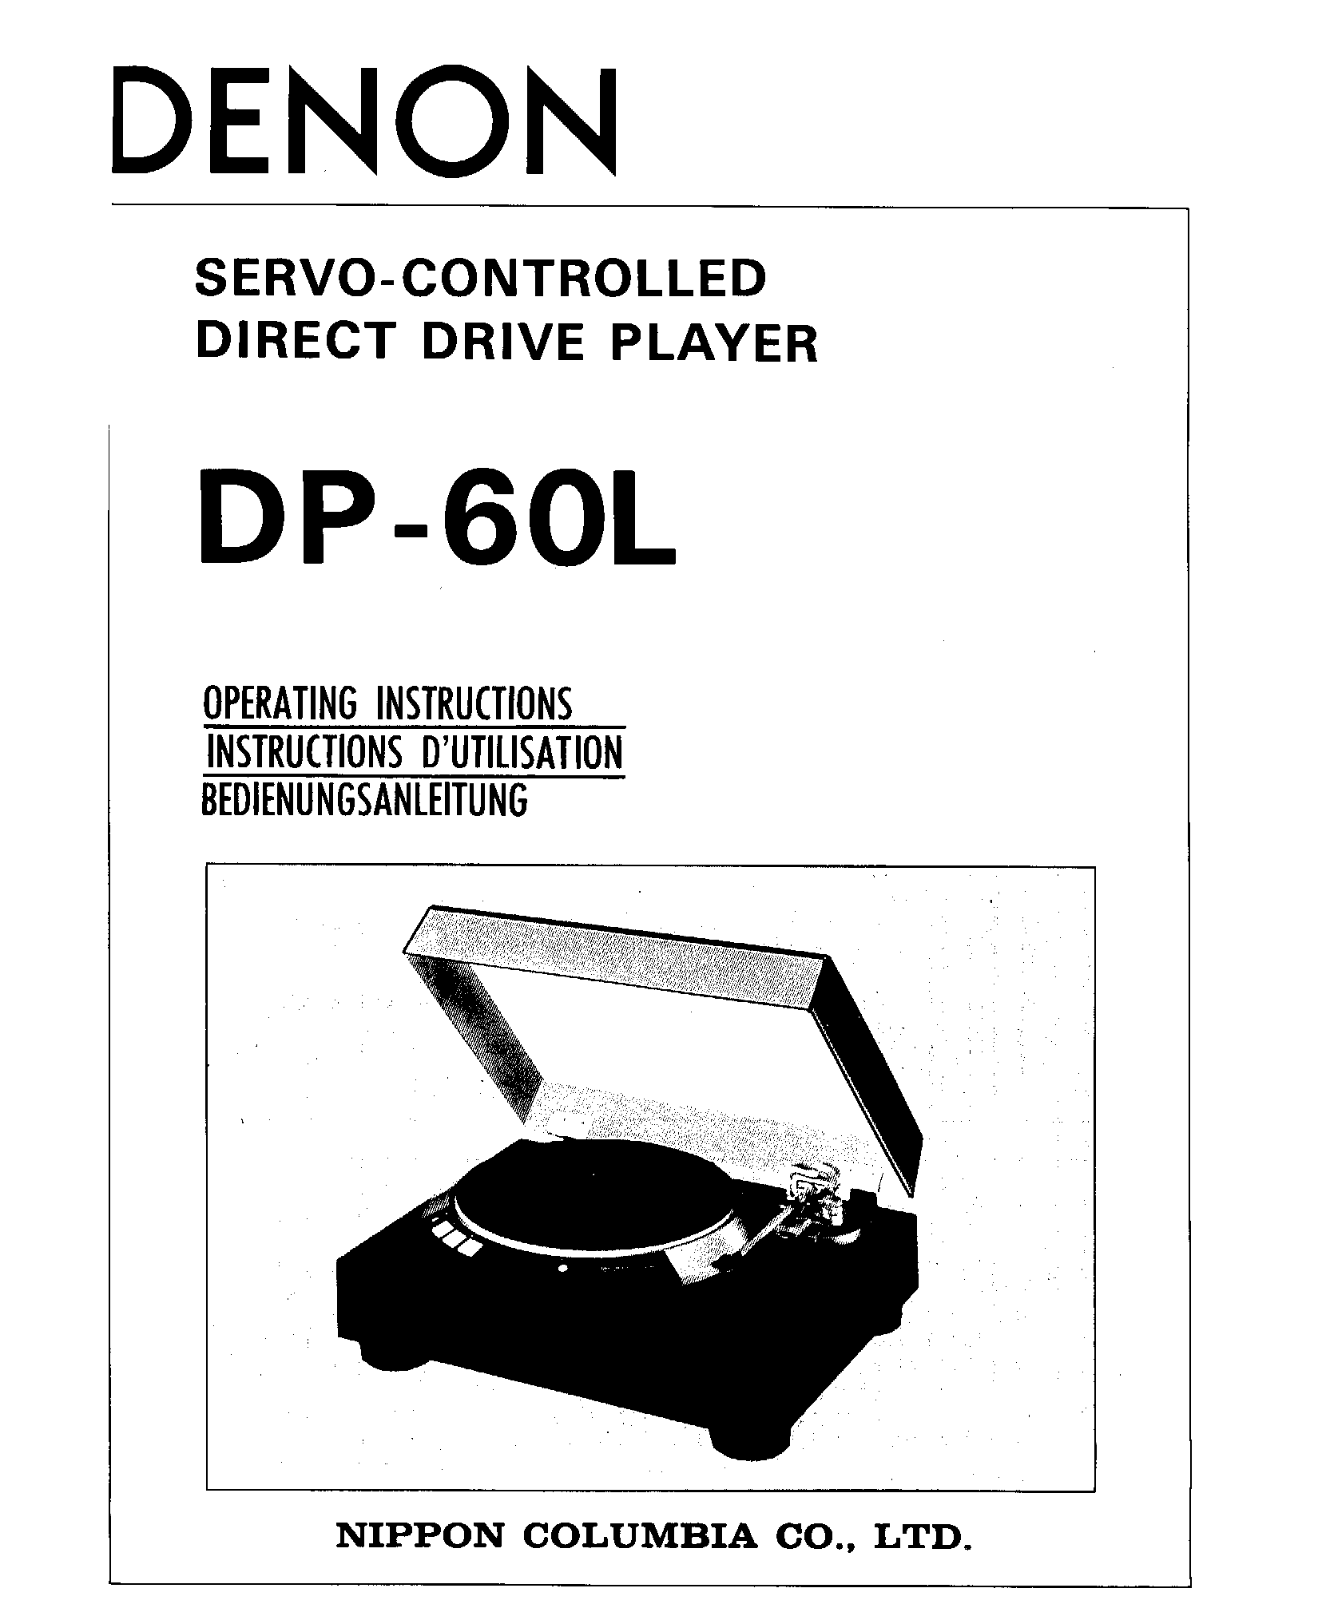 Denon DP-60L Manual